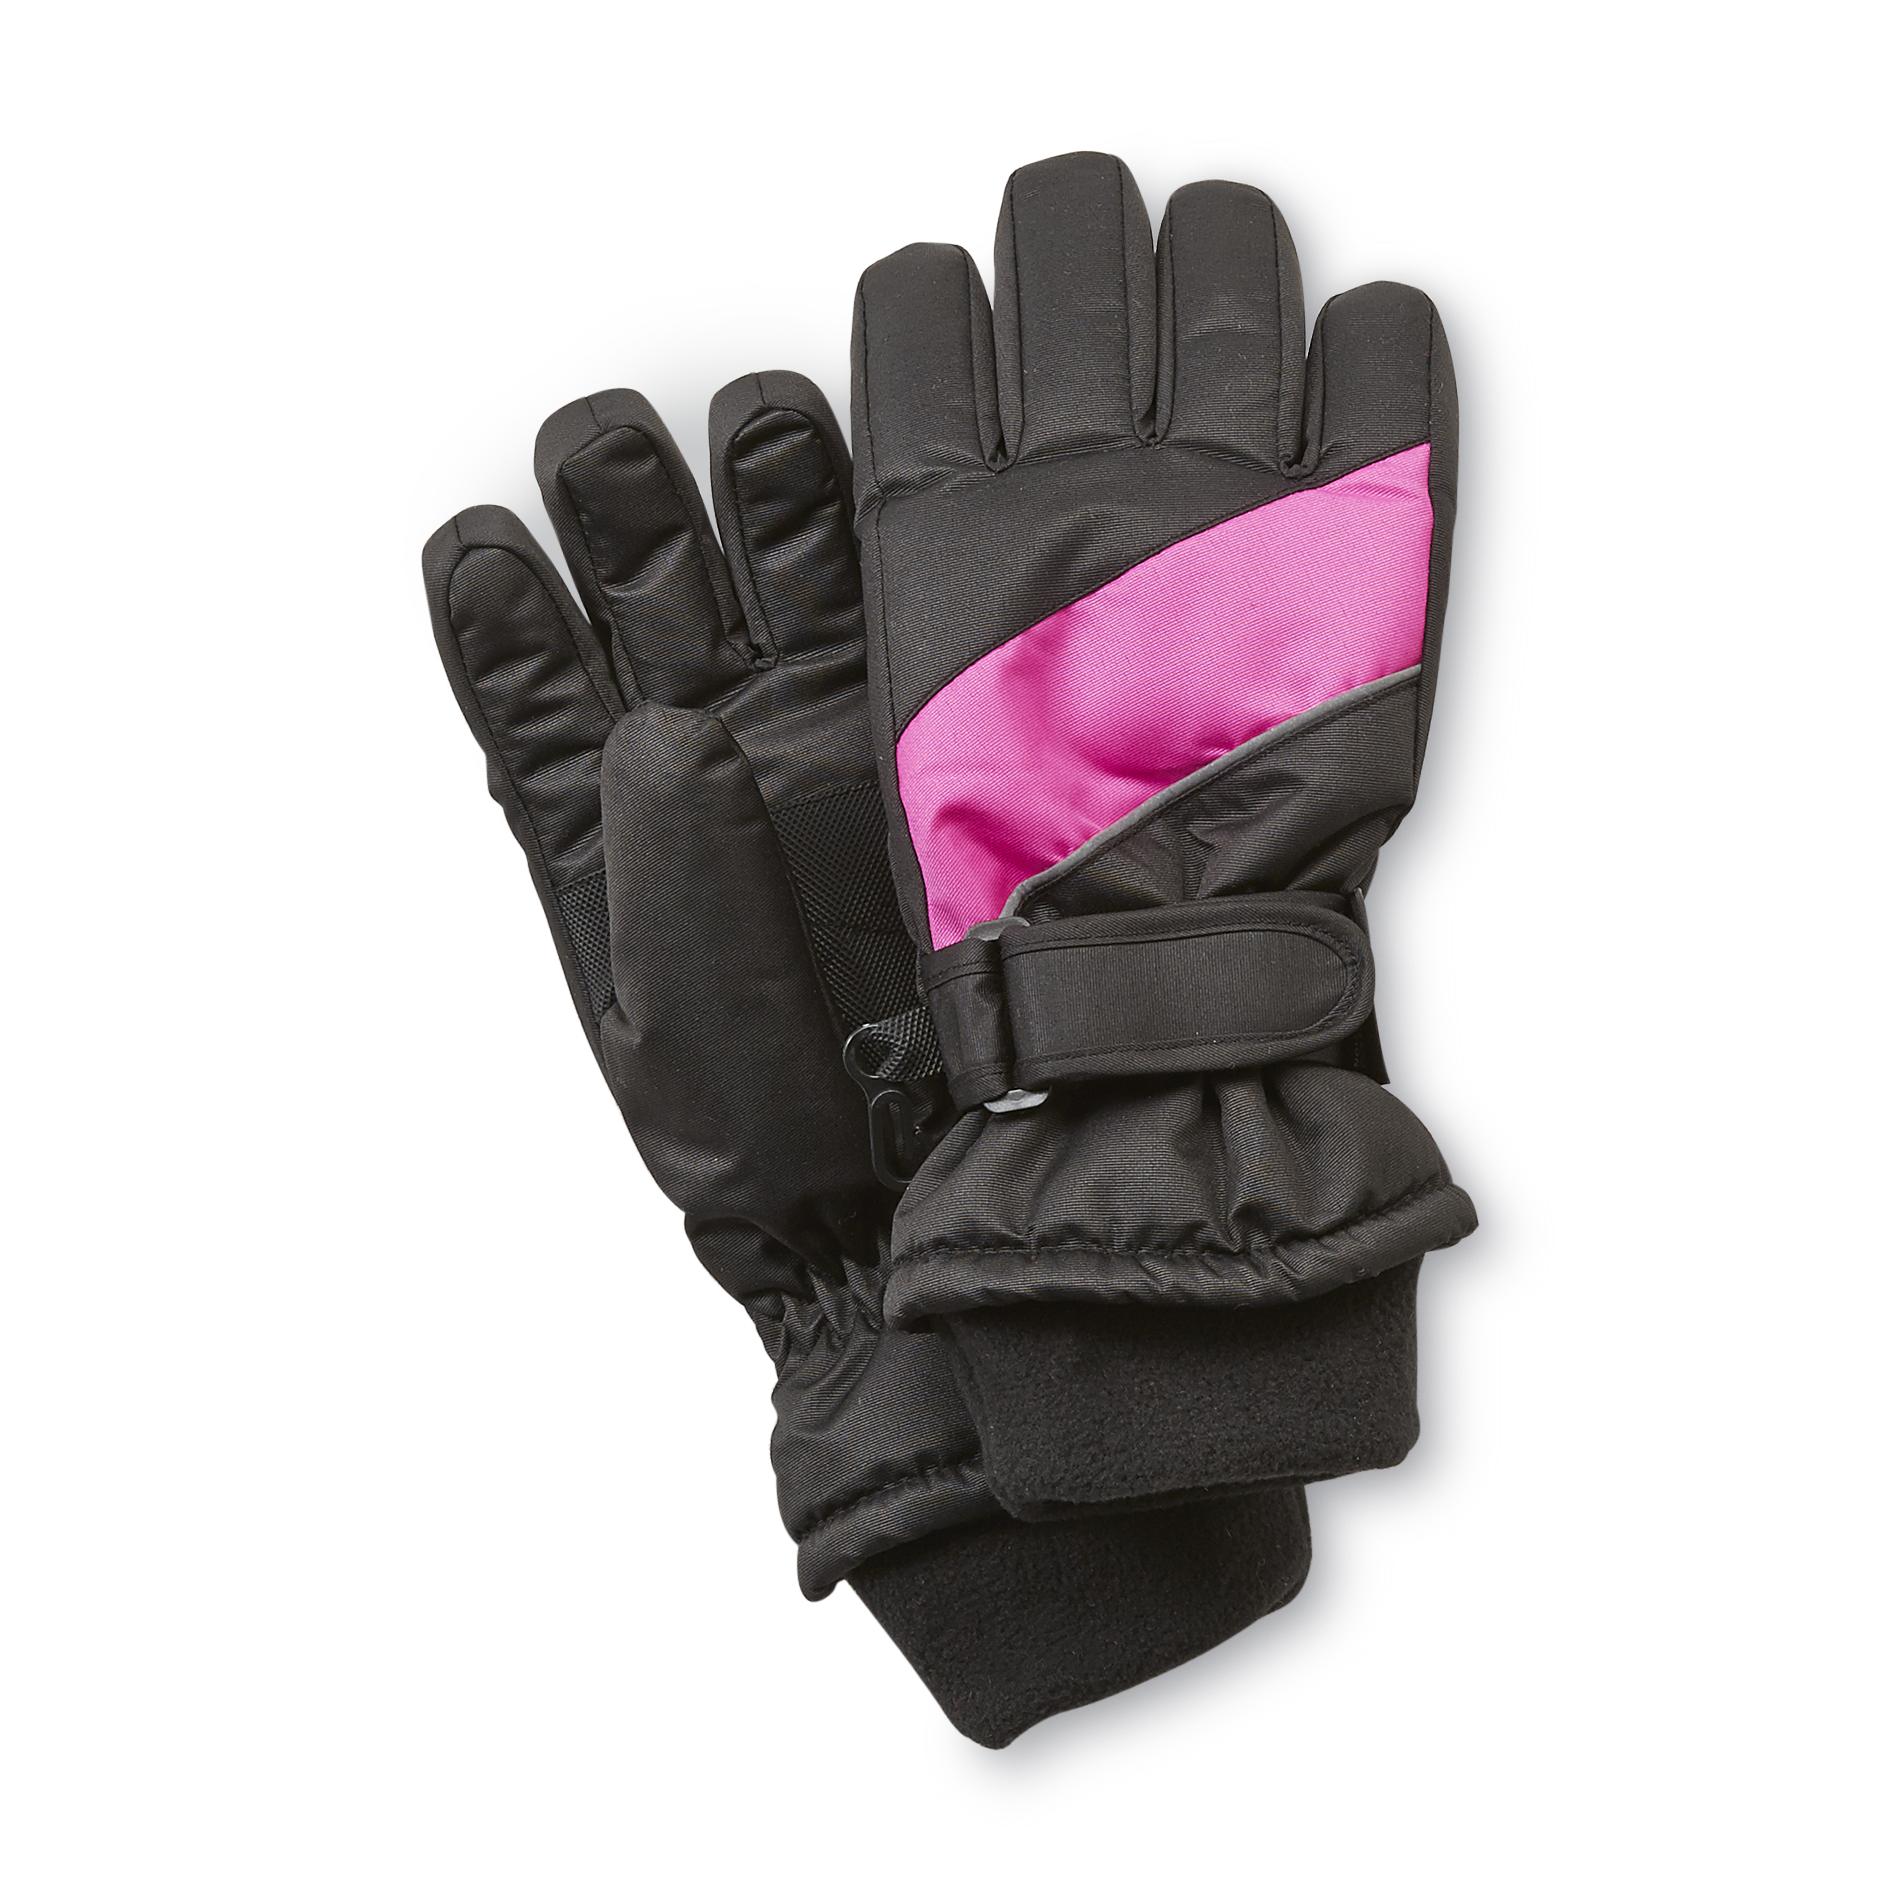 Athletech Girl's Colorblock Ski Gloves